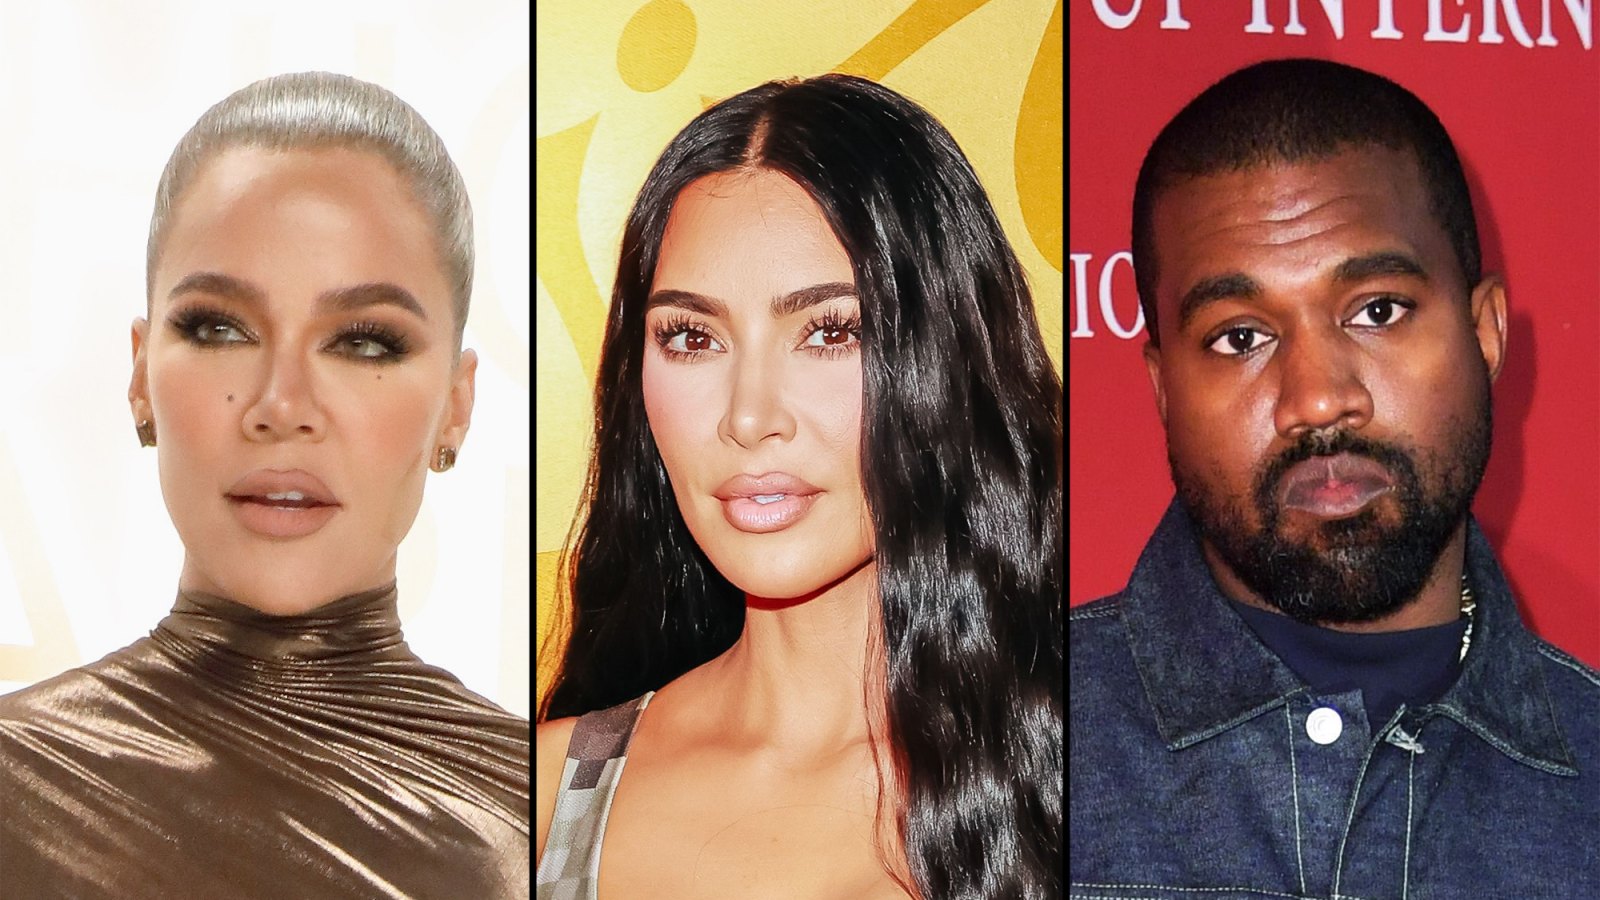 Khloe and Kim Address Kanye West-s Gravely Irresponsible Comments